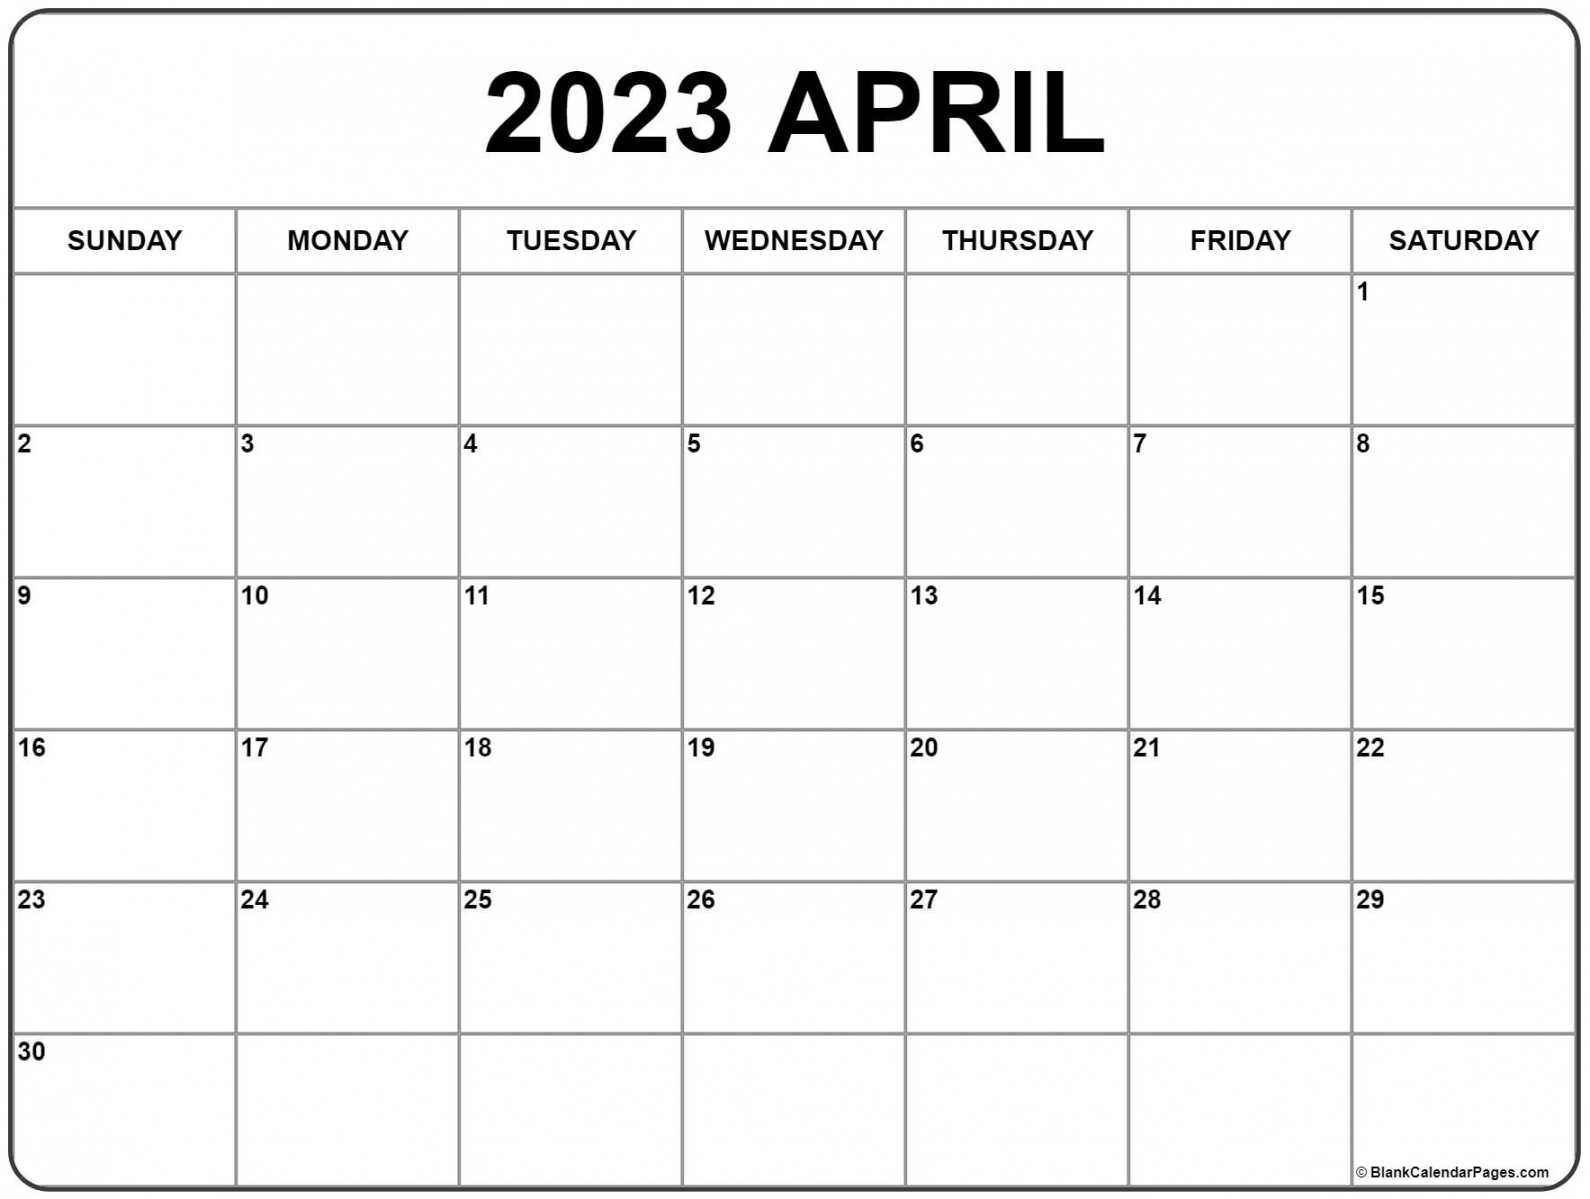 April 2023 Printable Calendar Free - Printable - April  calendar  free printable calendar